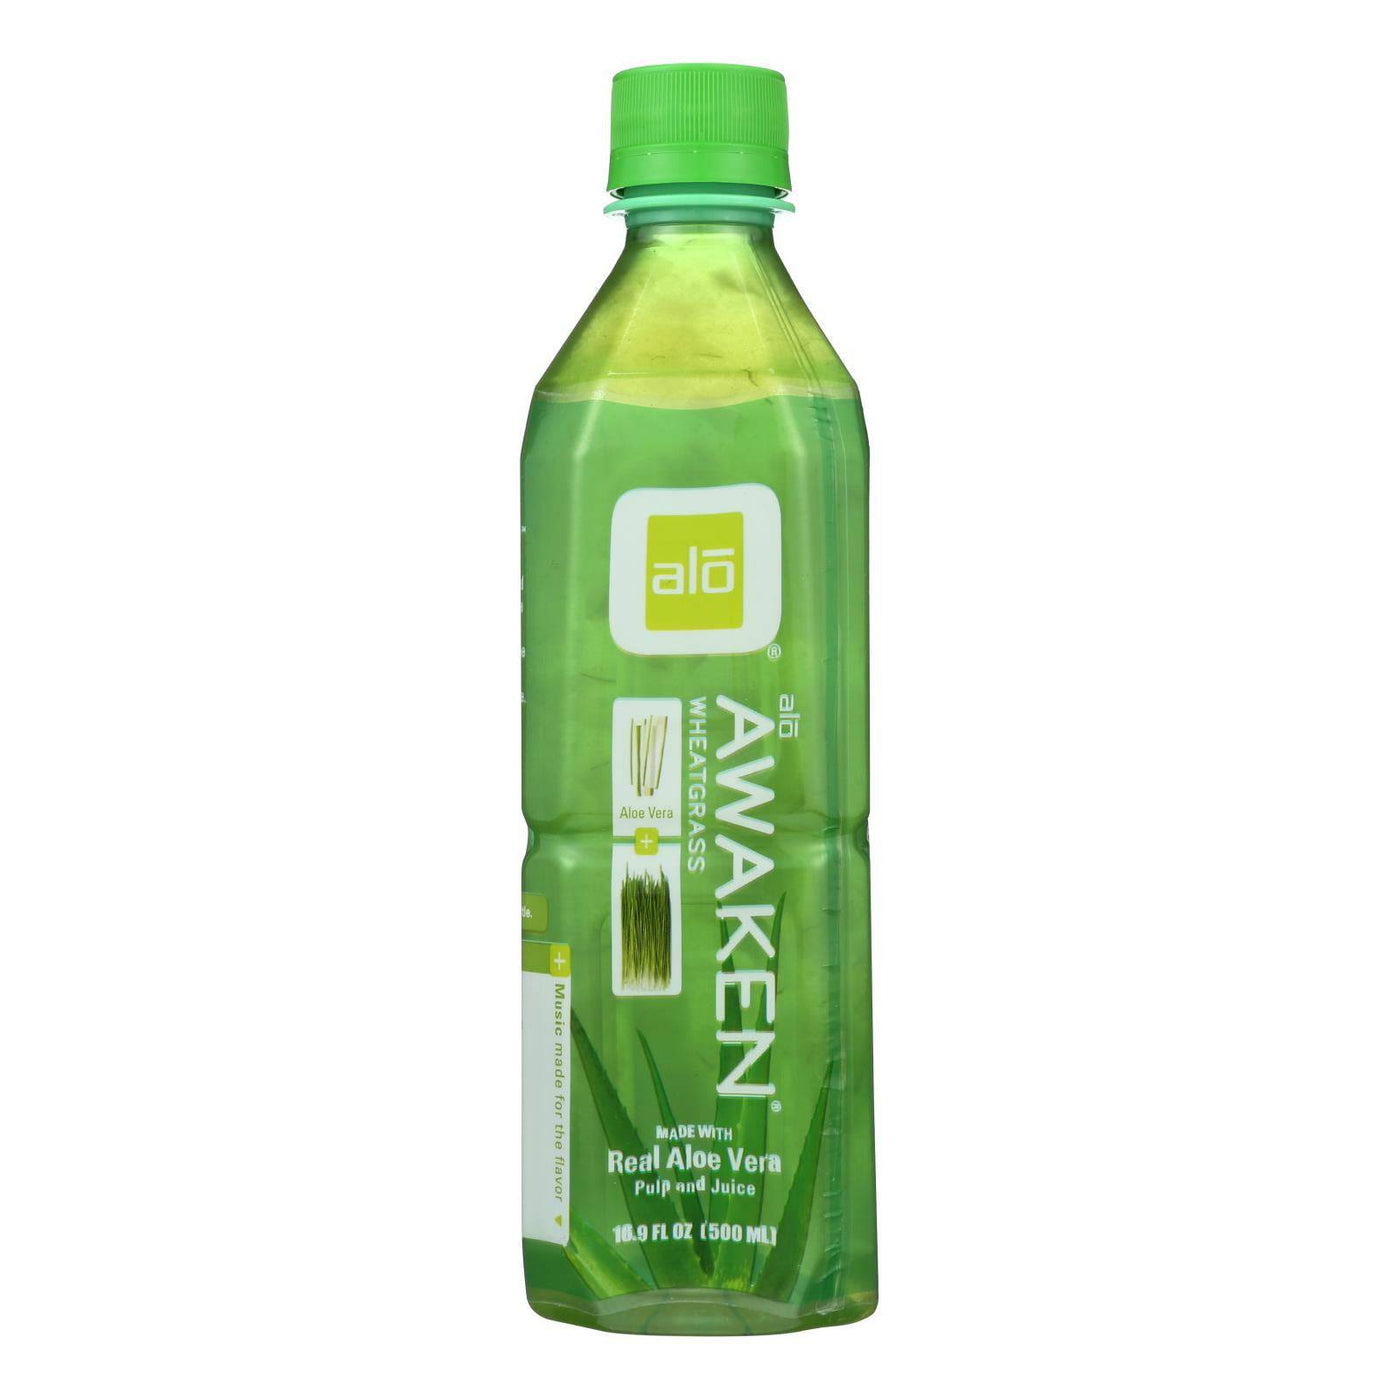 Buy Alo Original Awaken Aloe Vera Juice Drink  - Wheatgrass - Case Of 12 - 16.9 Fl Oz.  at OnlyNaturals.us